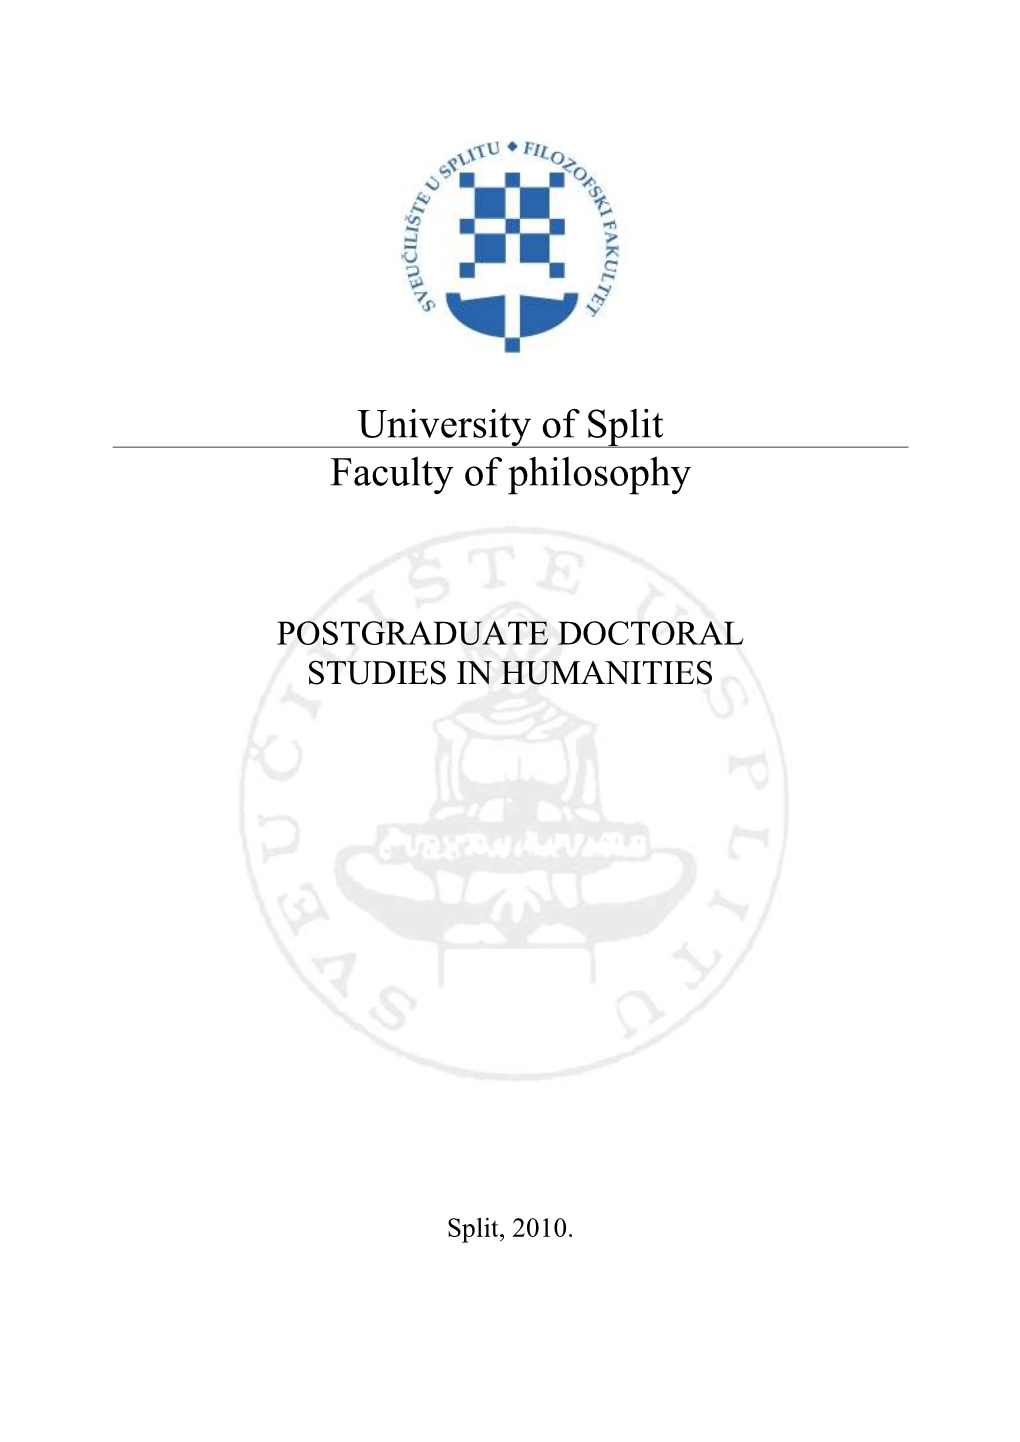 University of Split Faculty of Philosophy